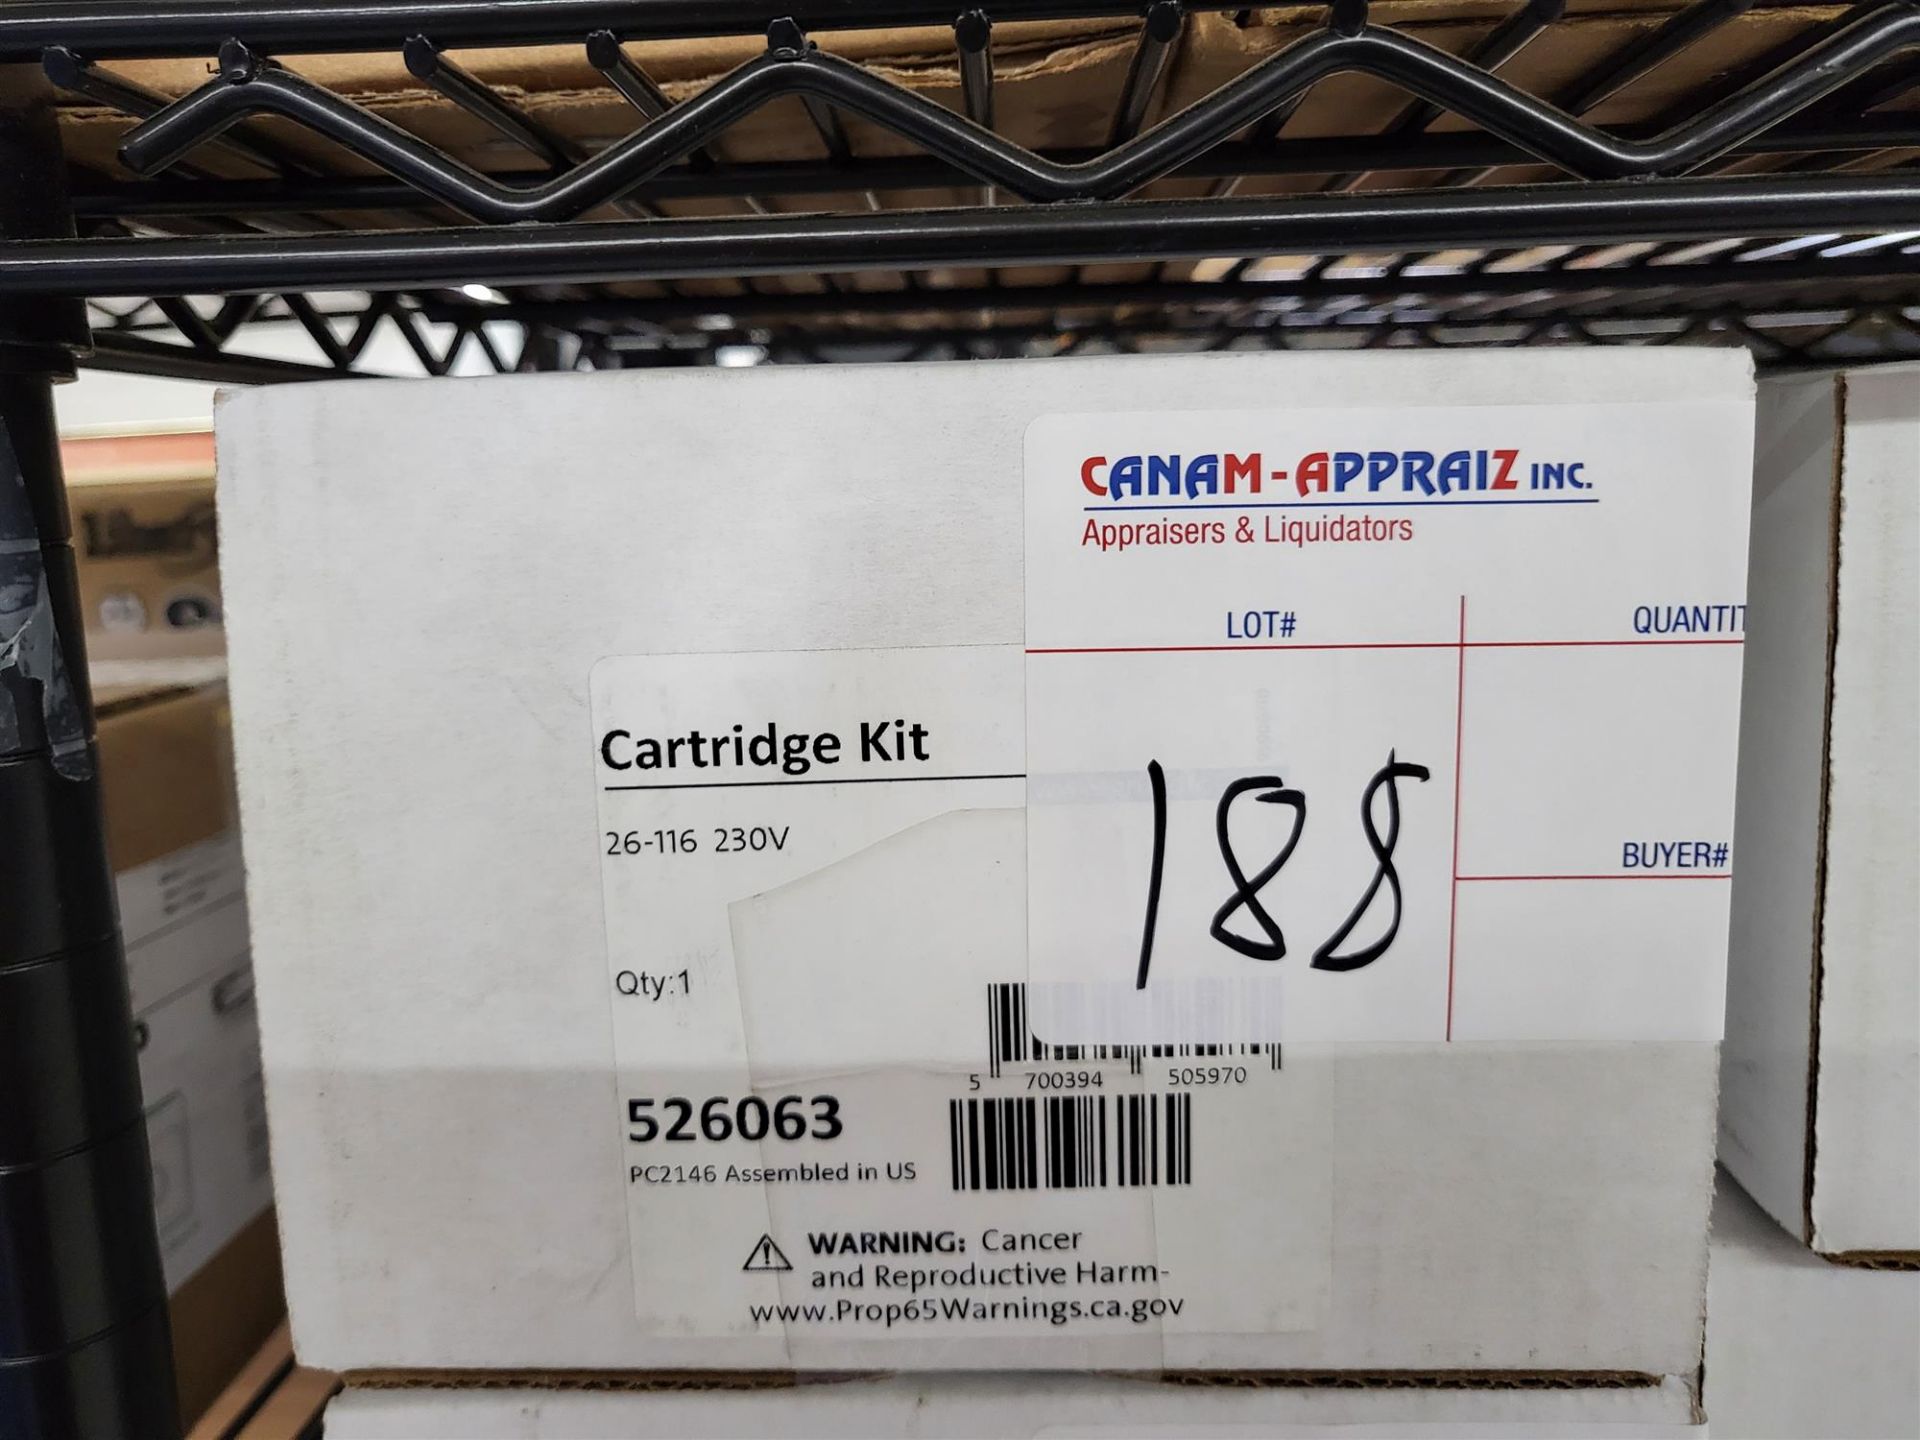 Grunfos X Cartridge Kit 26-230V - Product No: 526063